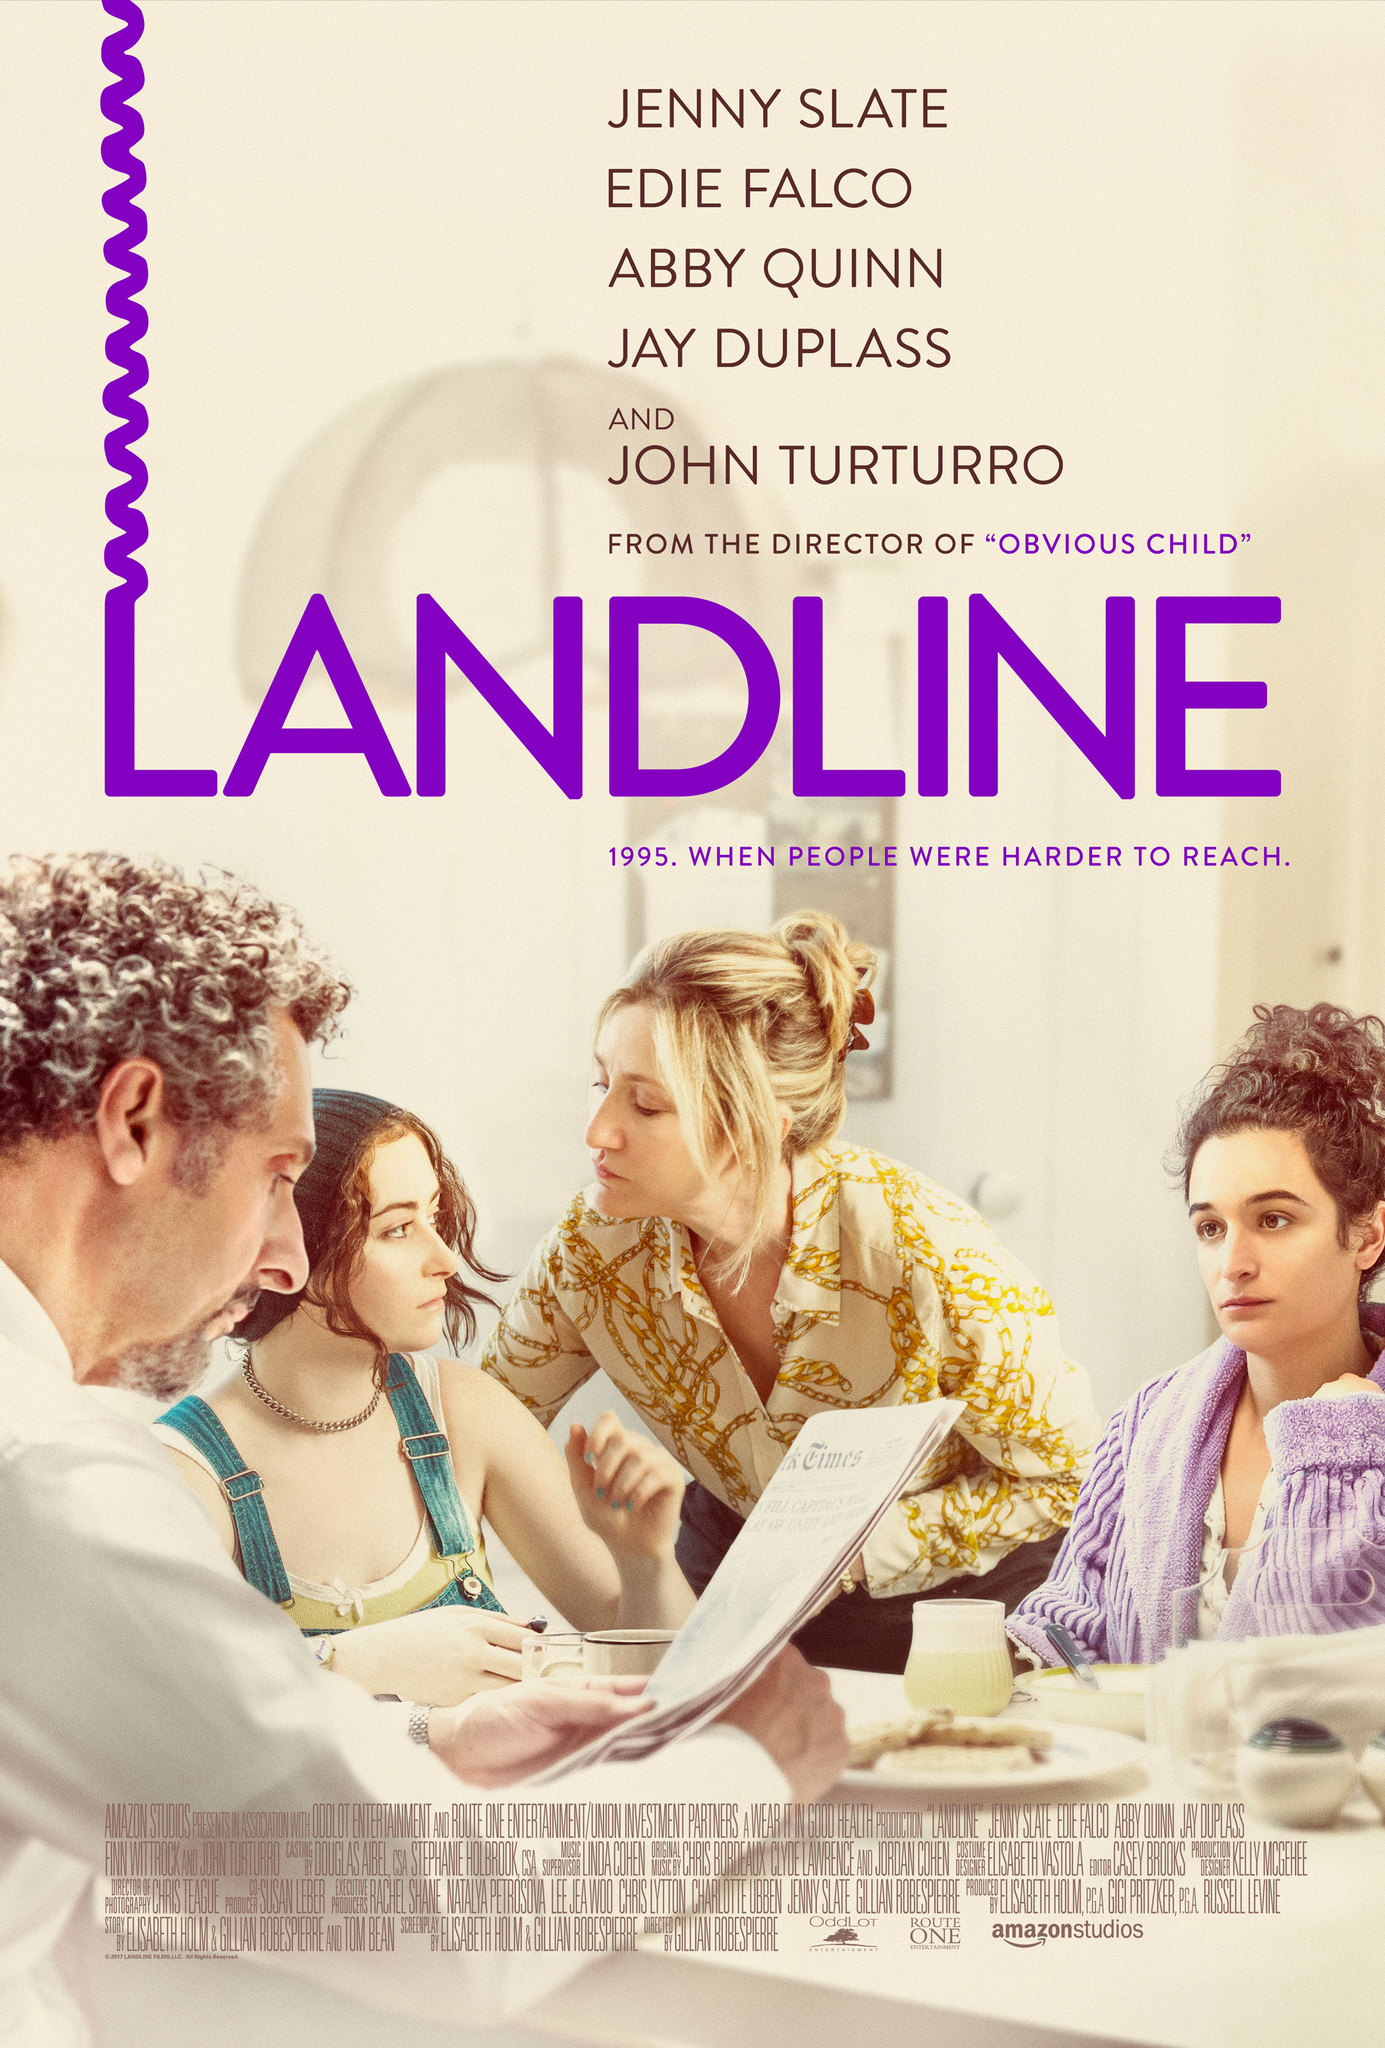 Nonton film Landline layarkaca21 indoxx1 ganool online streaming terbaru